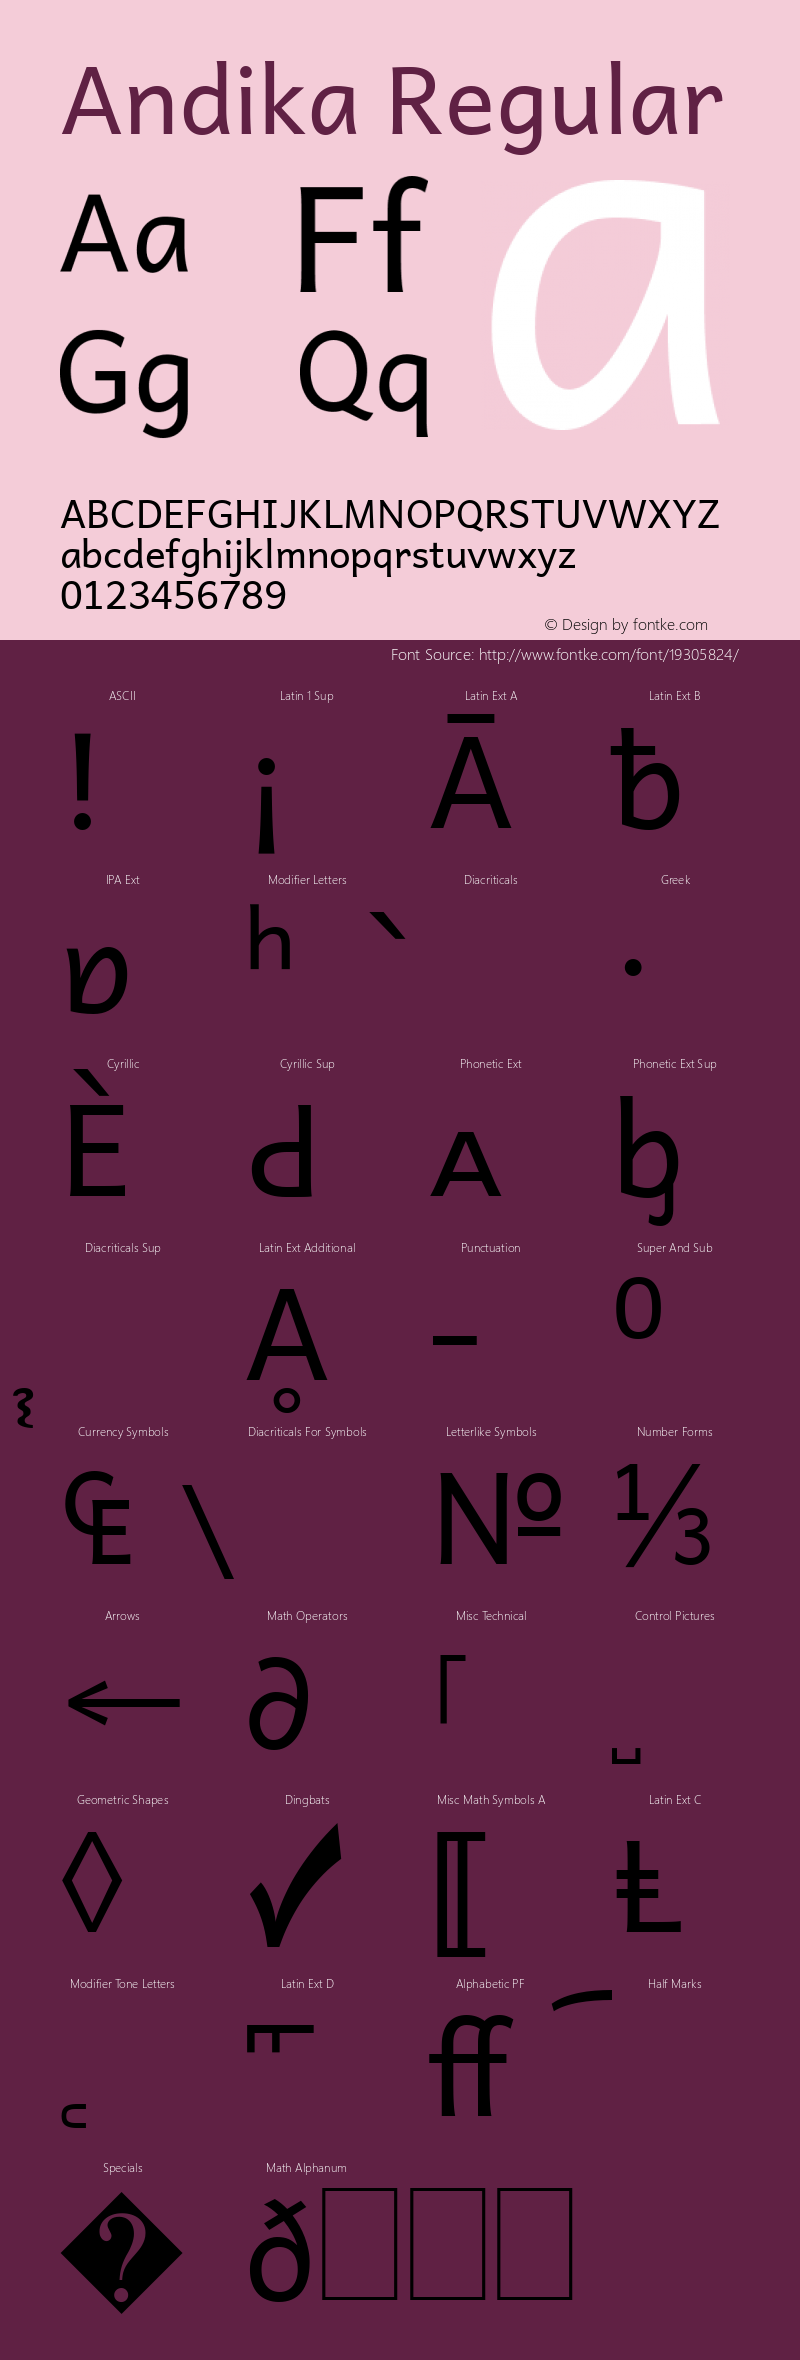 Andika Regular Version 1.001 Font Sample